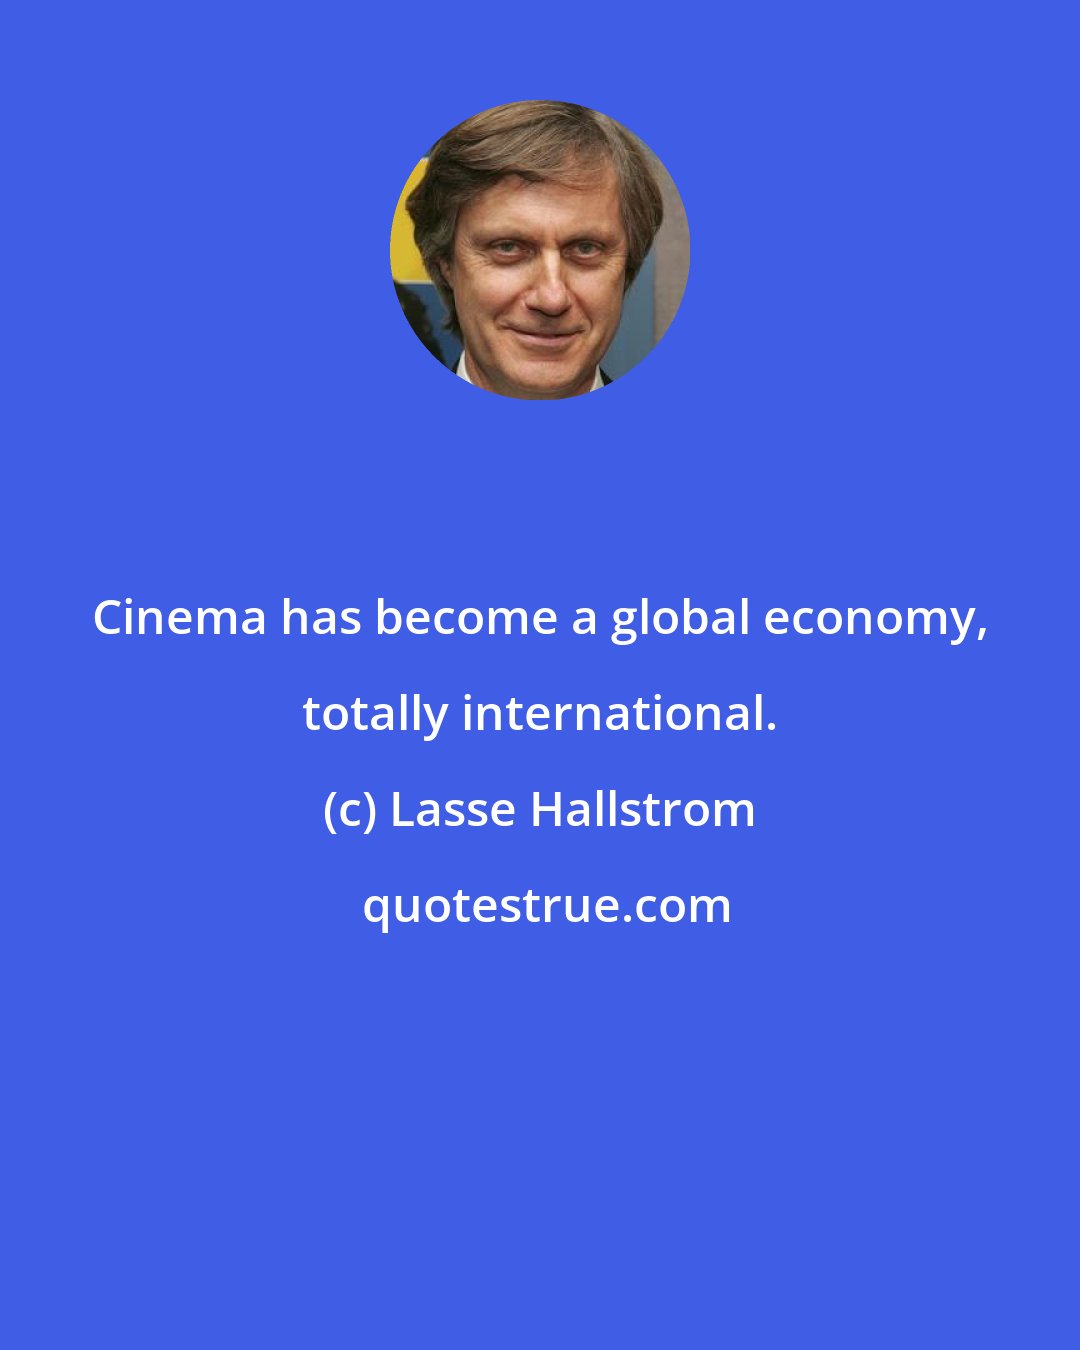 Lasse Hallstrom: Cinema has become a global economy, totally international.